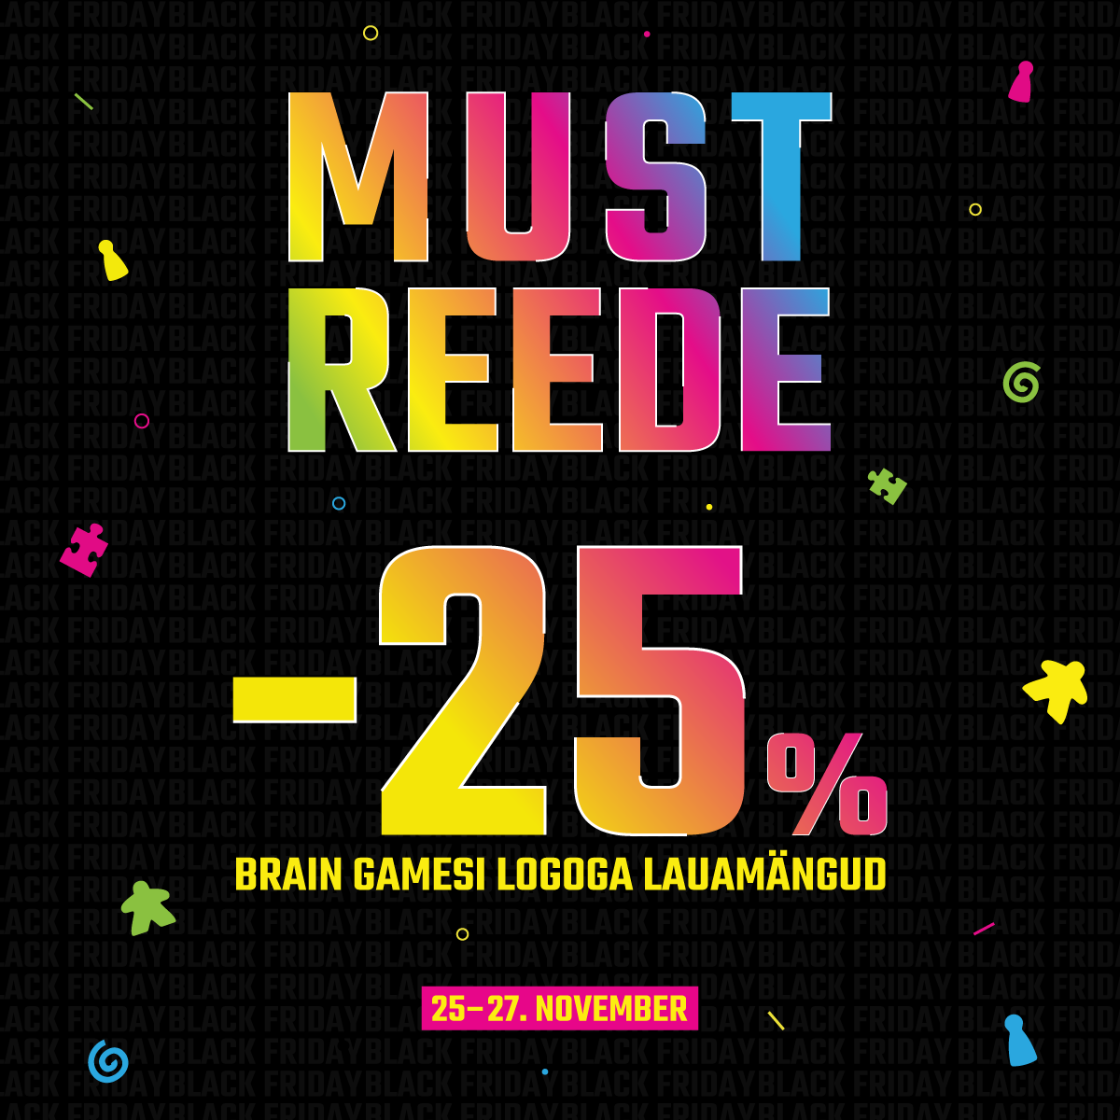 MUST REEDE! Brain Gamesi logoga lauamängud -25% - Brain Games